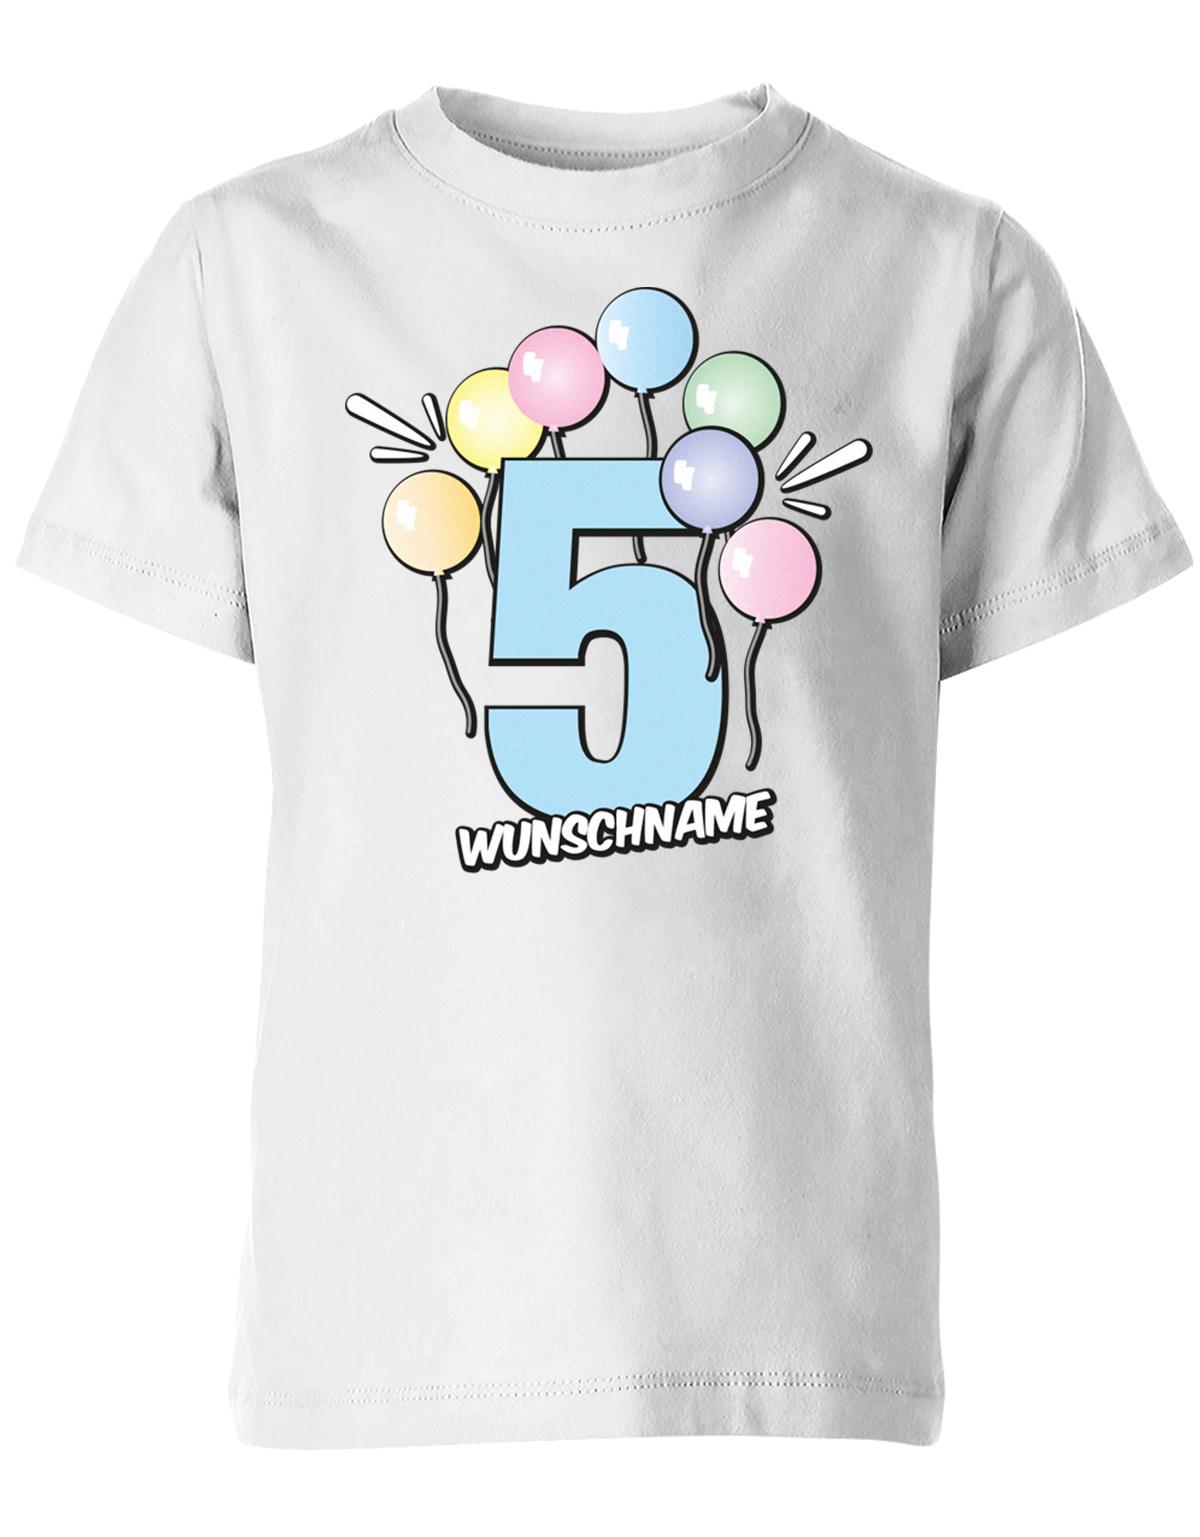 Luftballons-pastell-5-geburtstag-wunschname-kinder-shirt-weiss